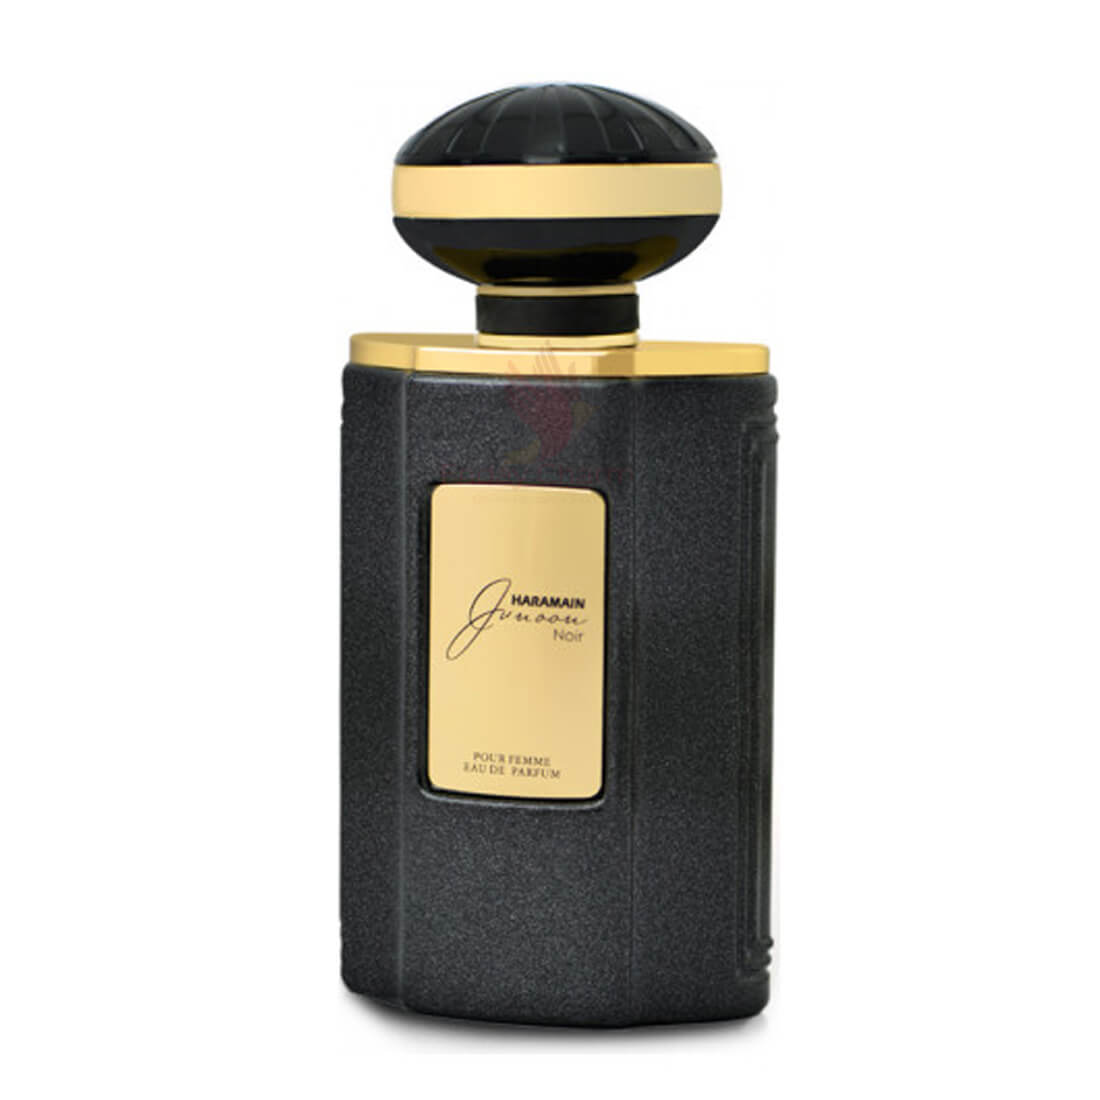 Al Haramain Junoon Noir Eau De Perfume Spray - 75ml